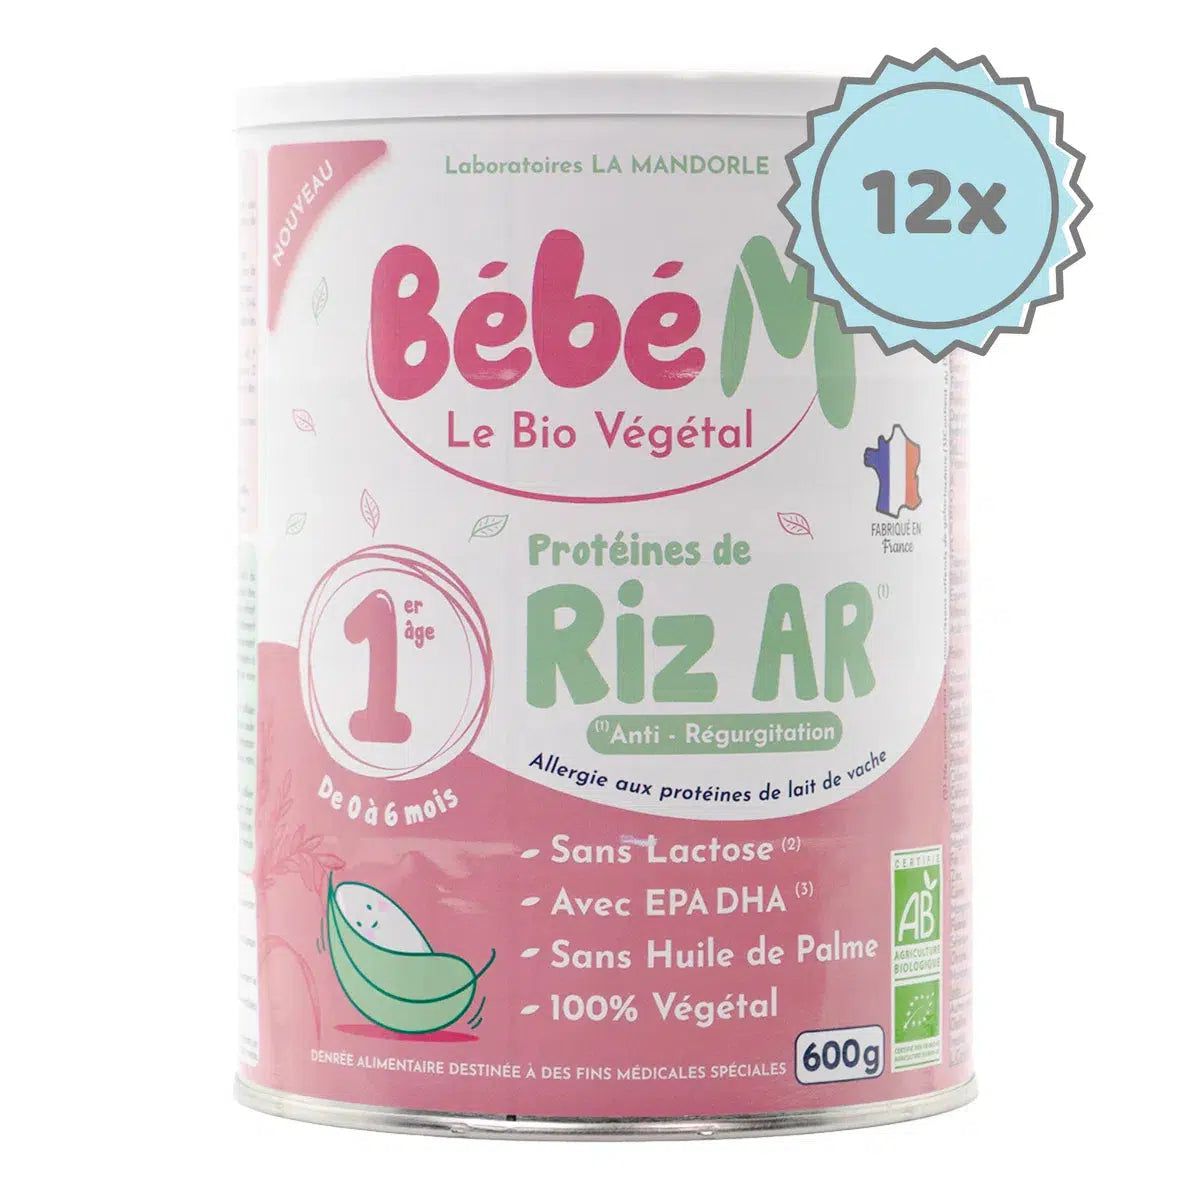 Bebe M (Bebe Mandorle) Organic Anti-Reflux Rice-Based Infant Formula - Stage 1 (0 to 6 months) - (600g)